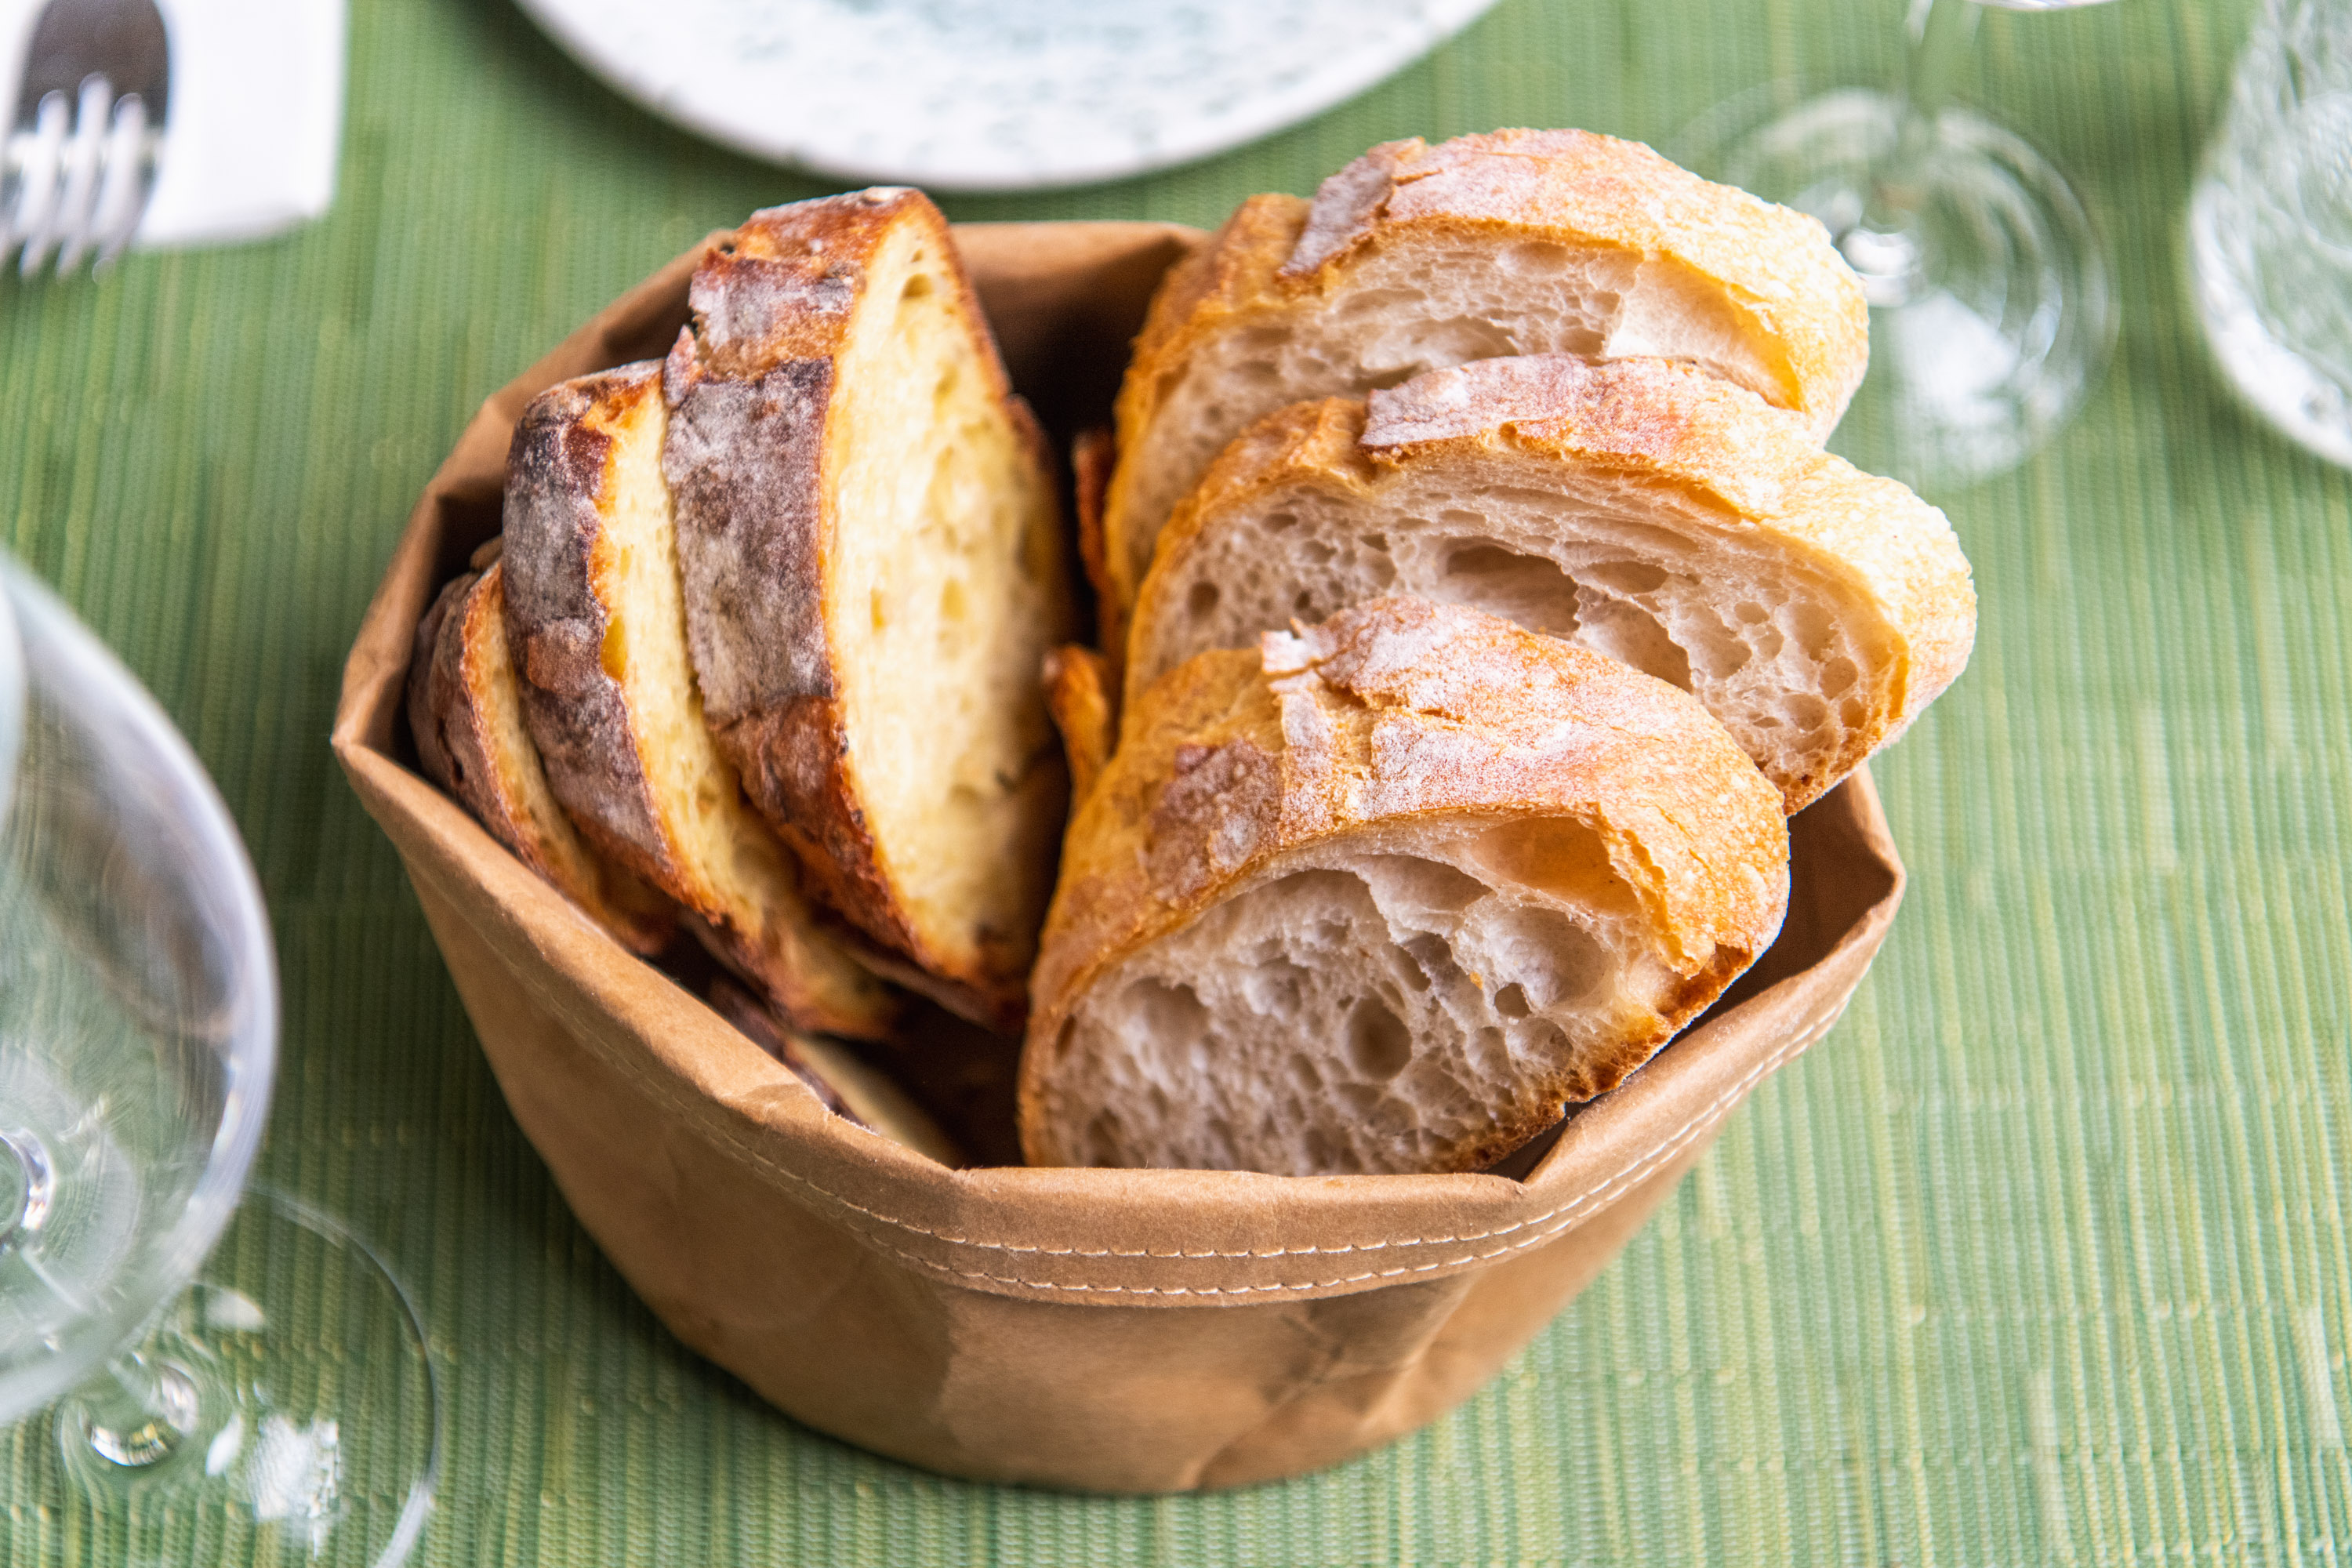 Artesian bread